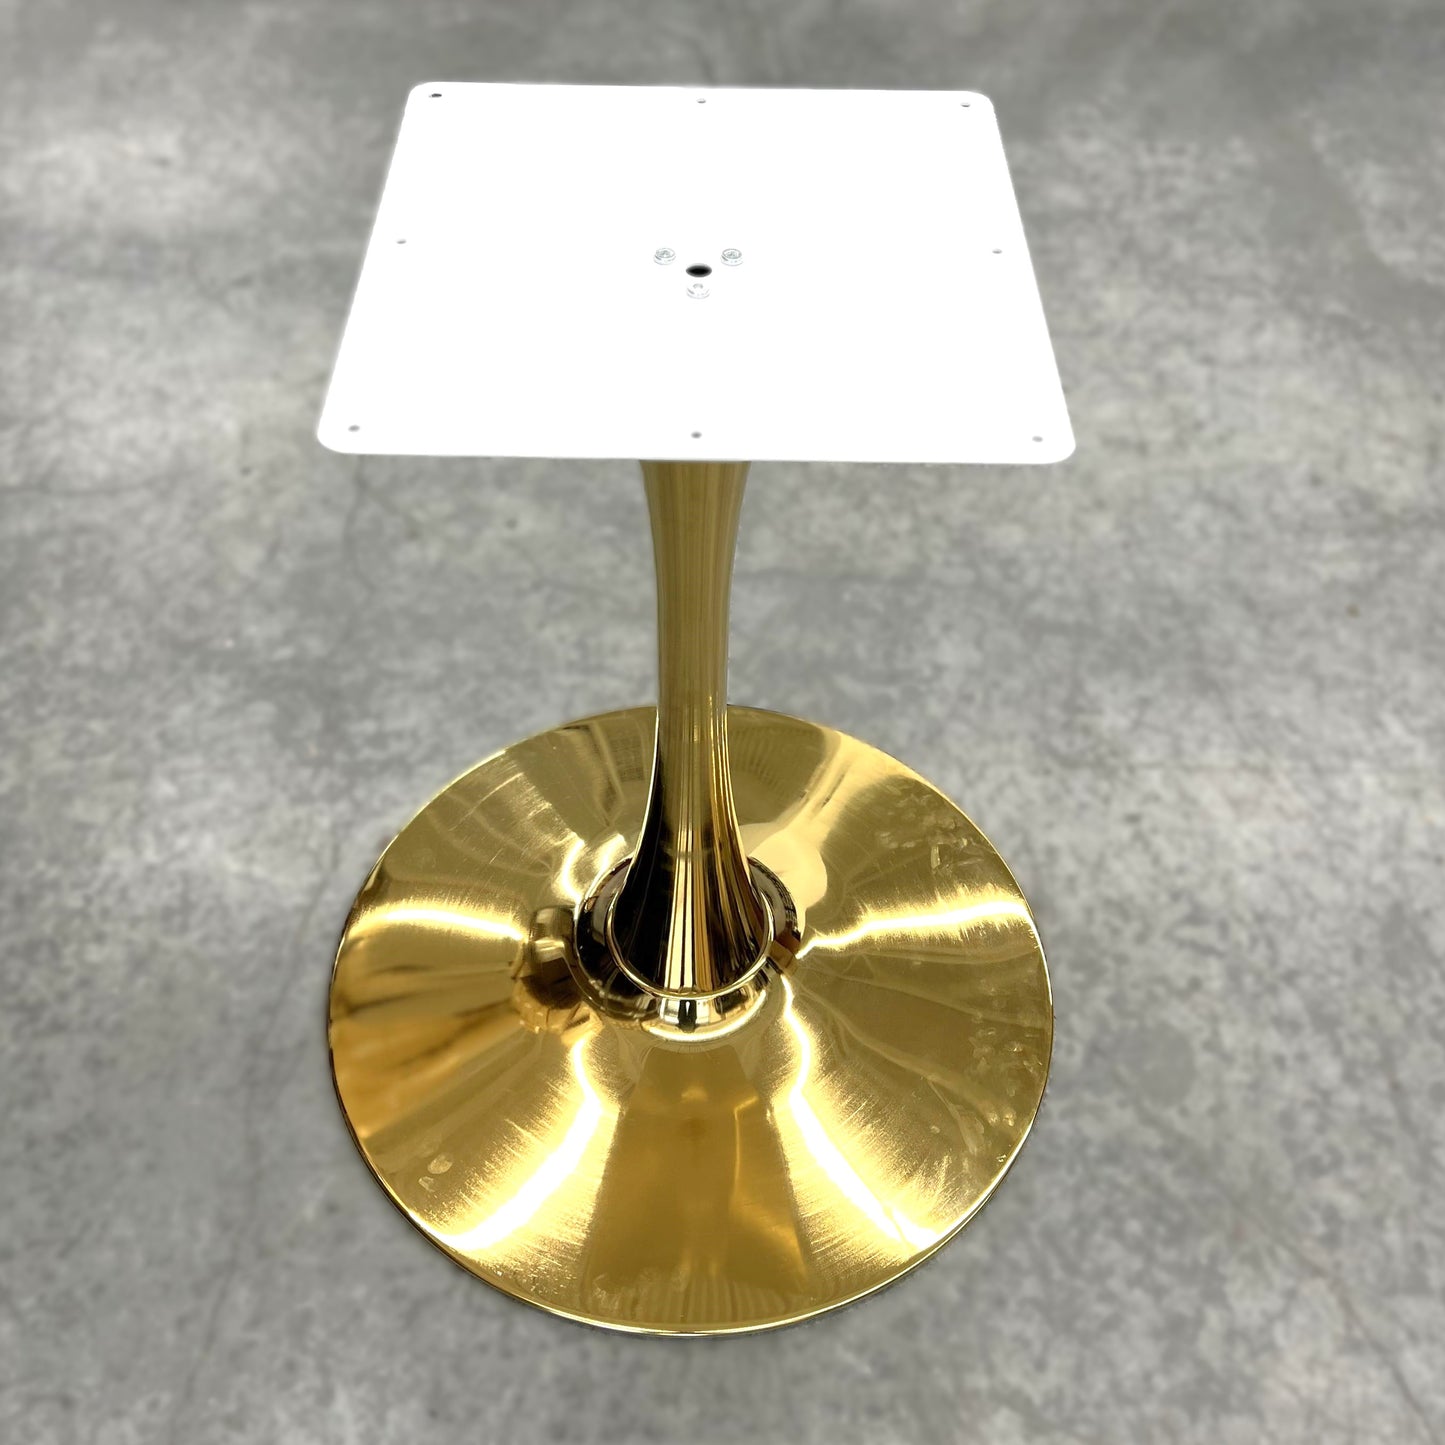 Brass Table Base, Tulip Table Base, Pedestal Table Base, Dining Table Legs, Furniture legs, Table Legs, Table Base, Metal Table Base, Steel Table Base